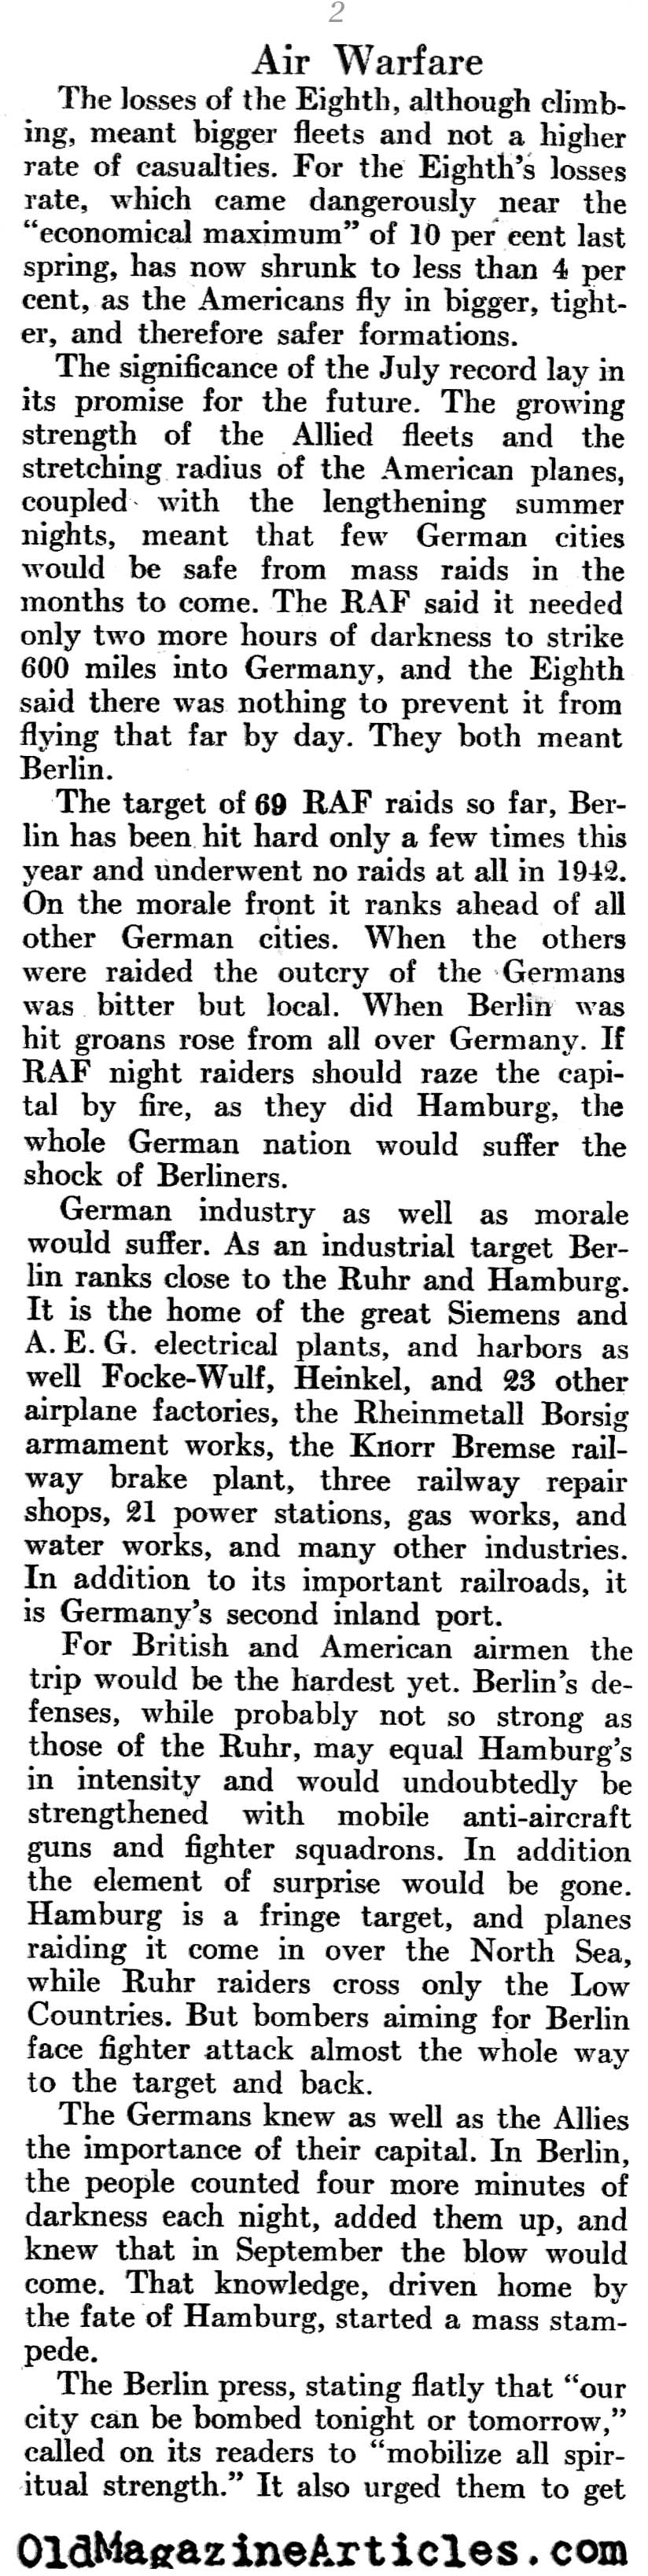 Sticking It To Berlin (Newsweek Magazine, 1943)